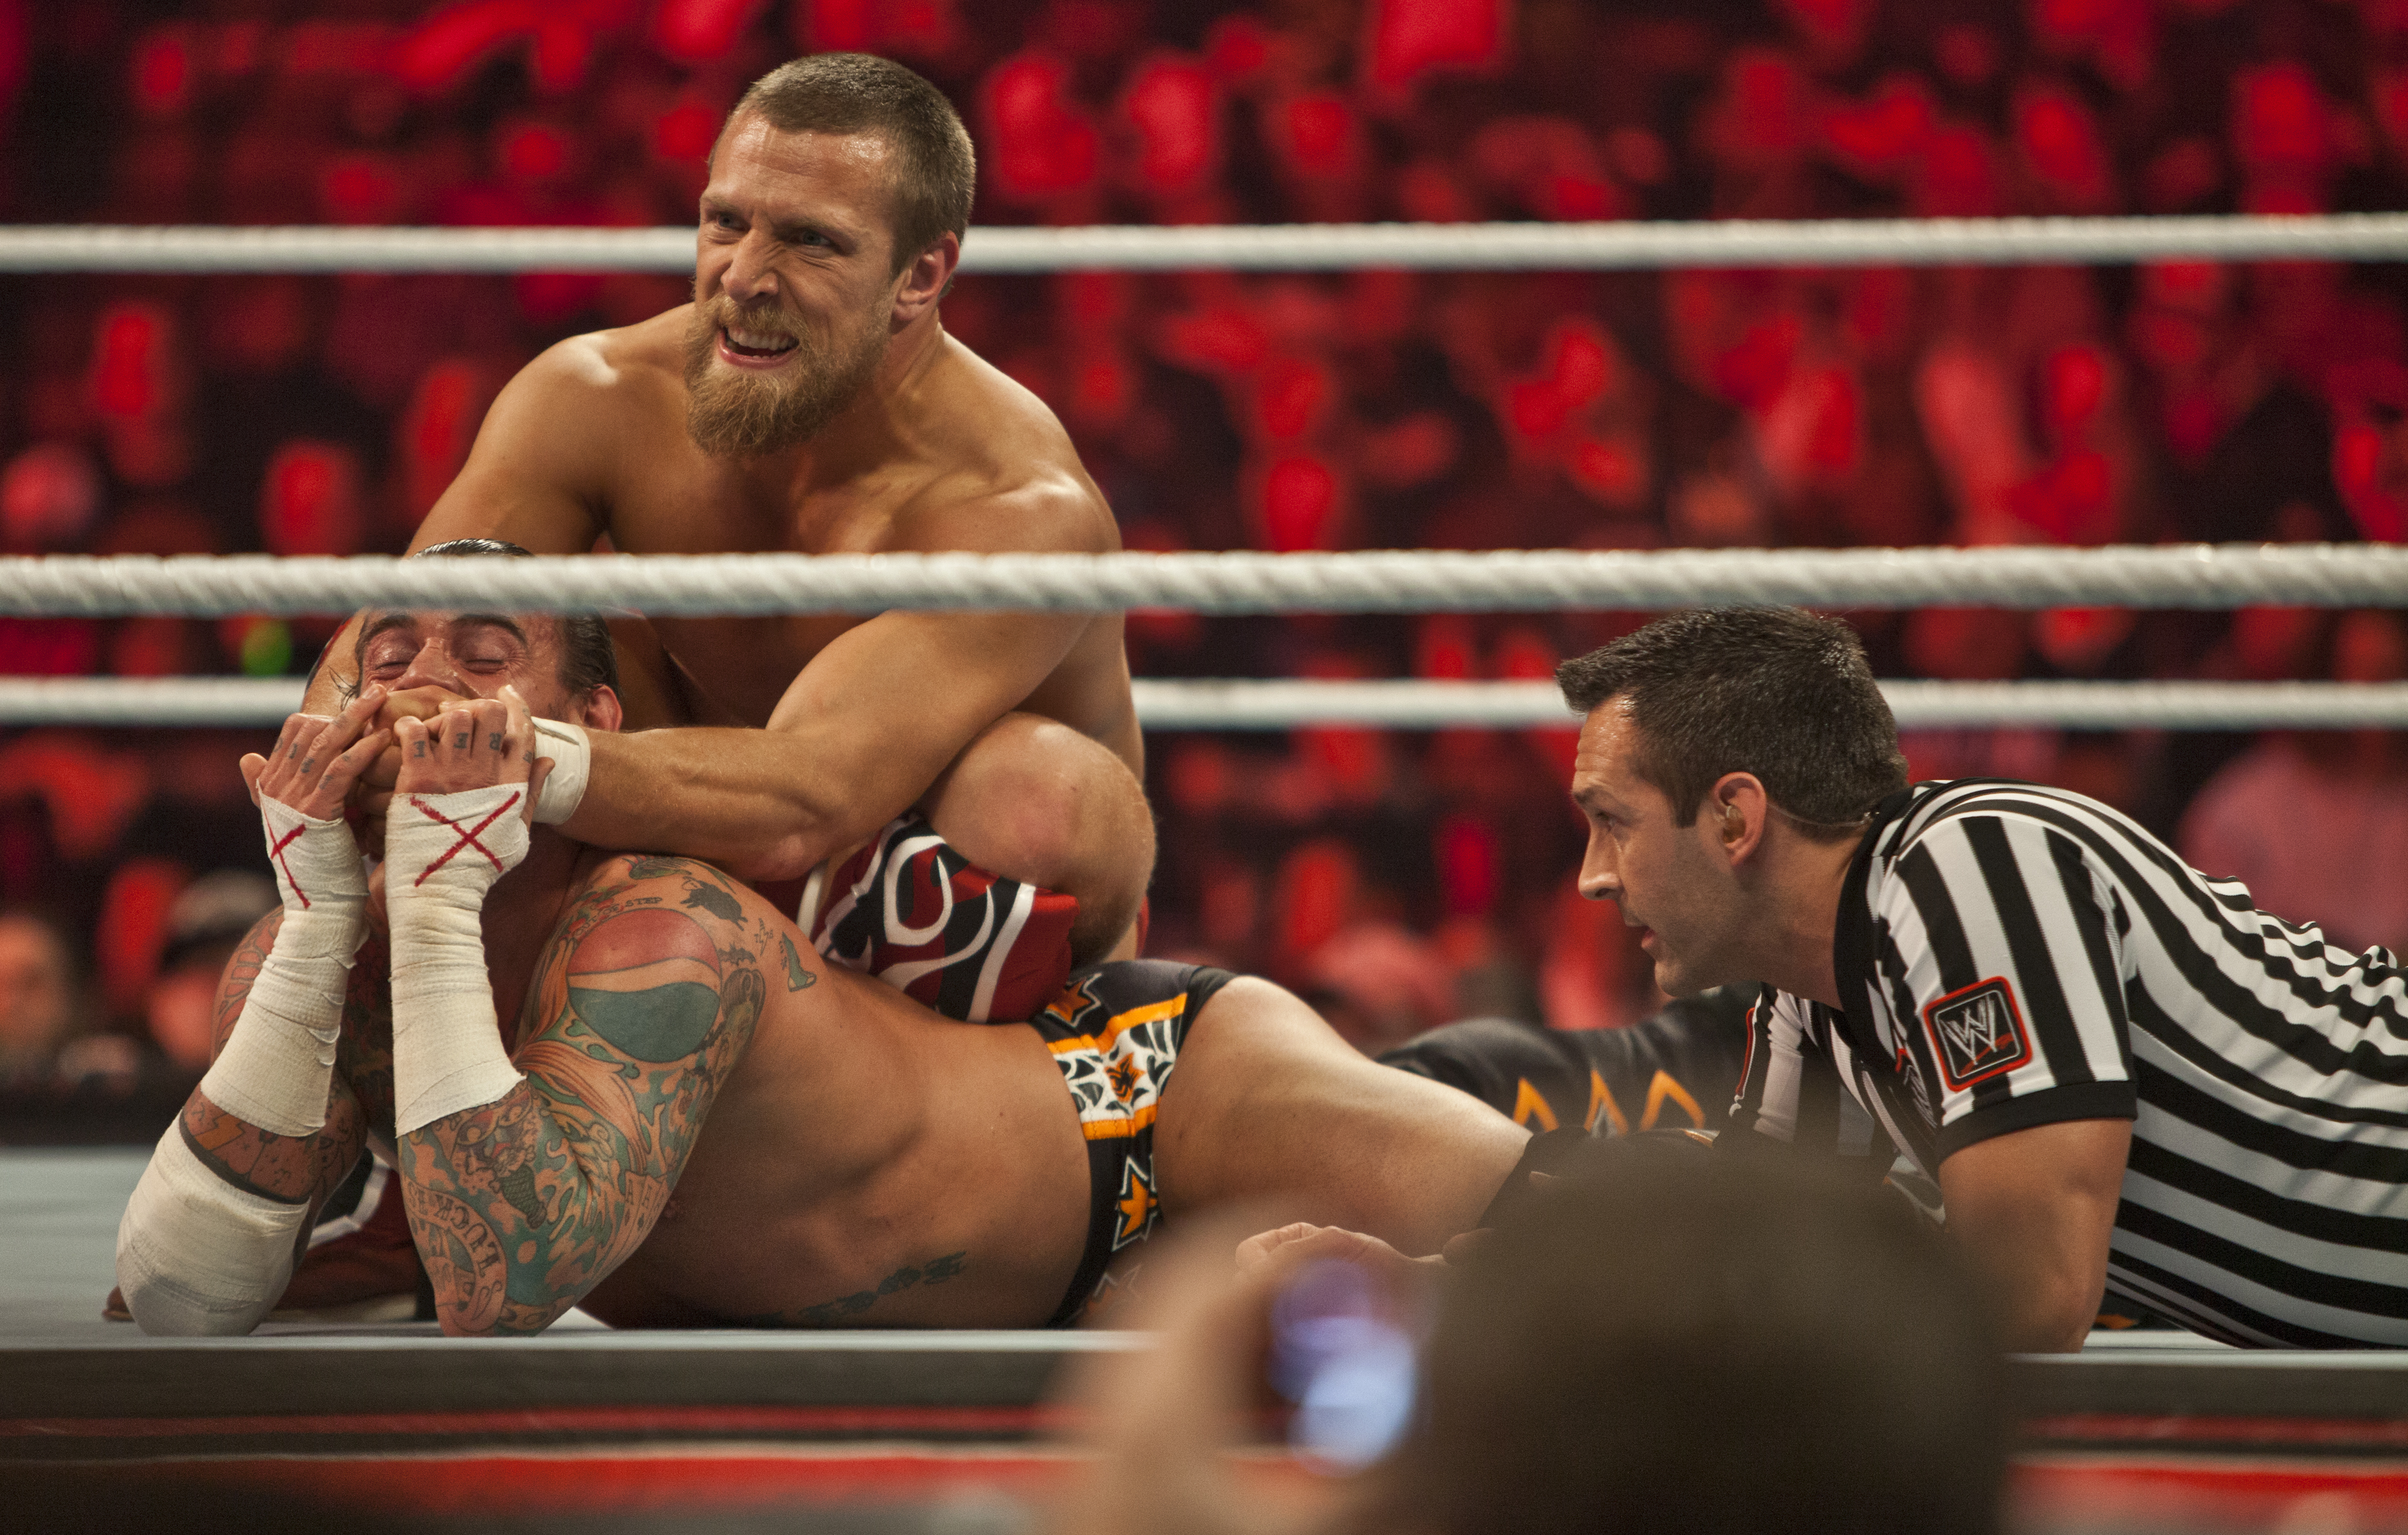 Daniel Bryan v CM Punk